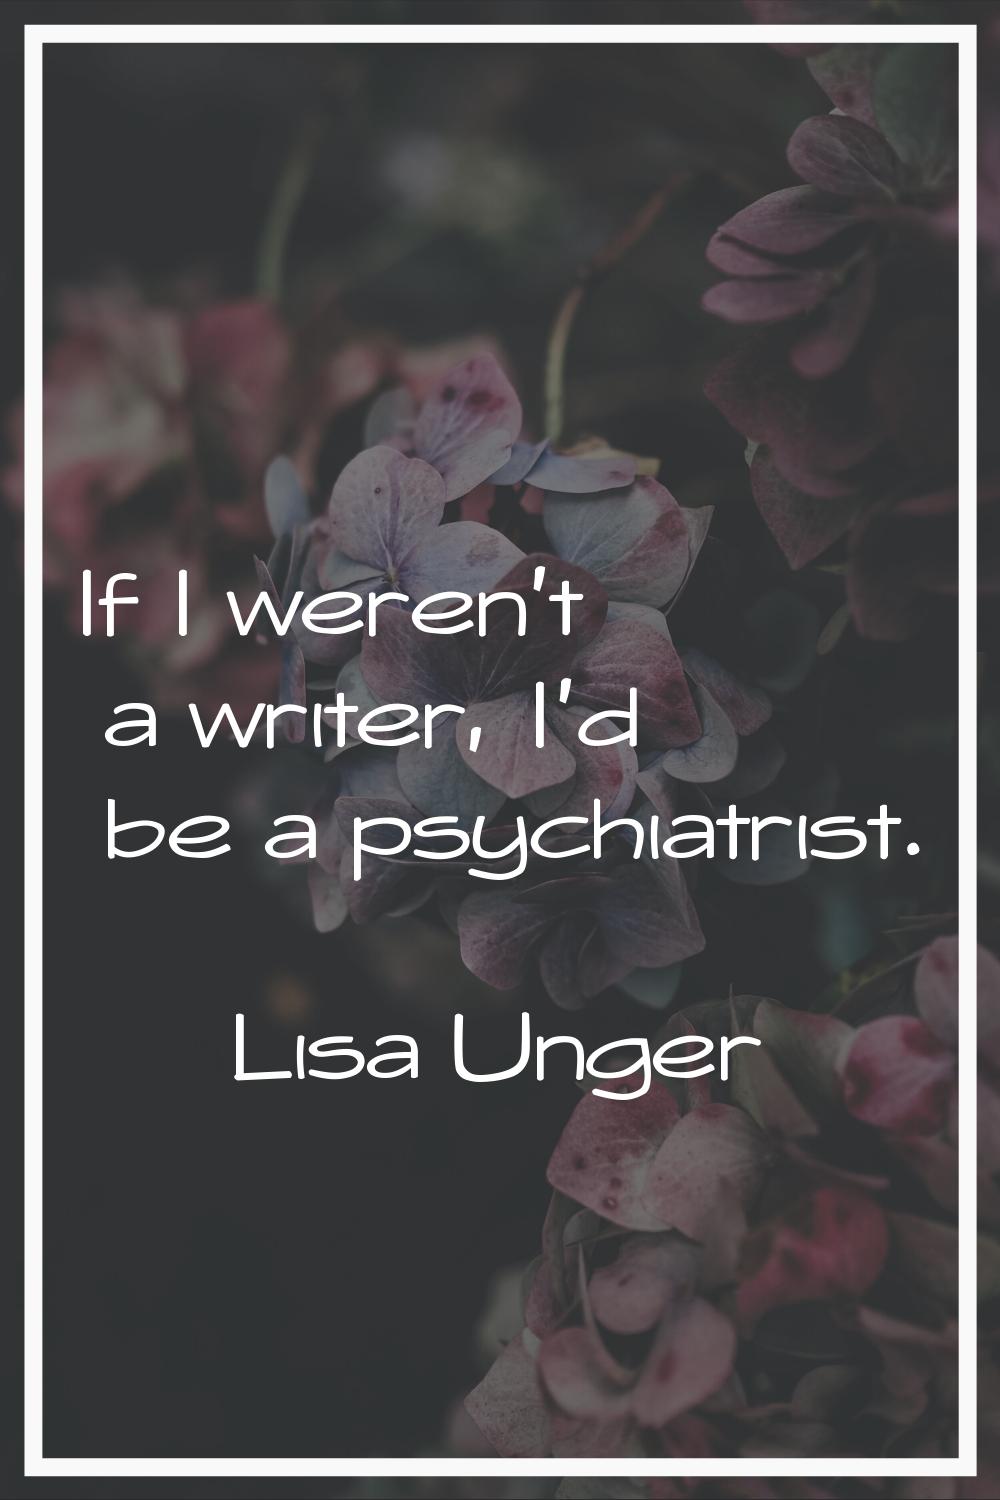 If I weren't a writer, I'd be a psychiatrist.